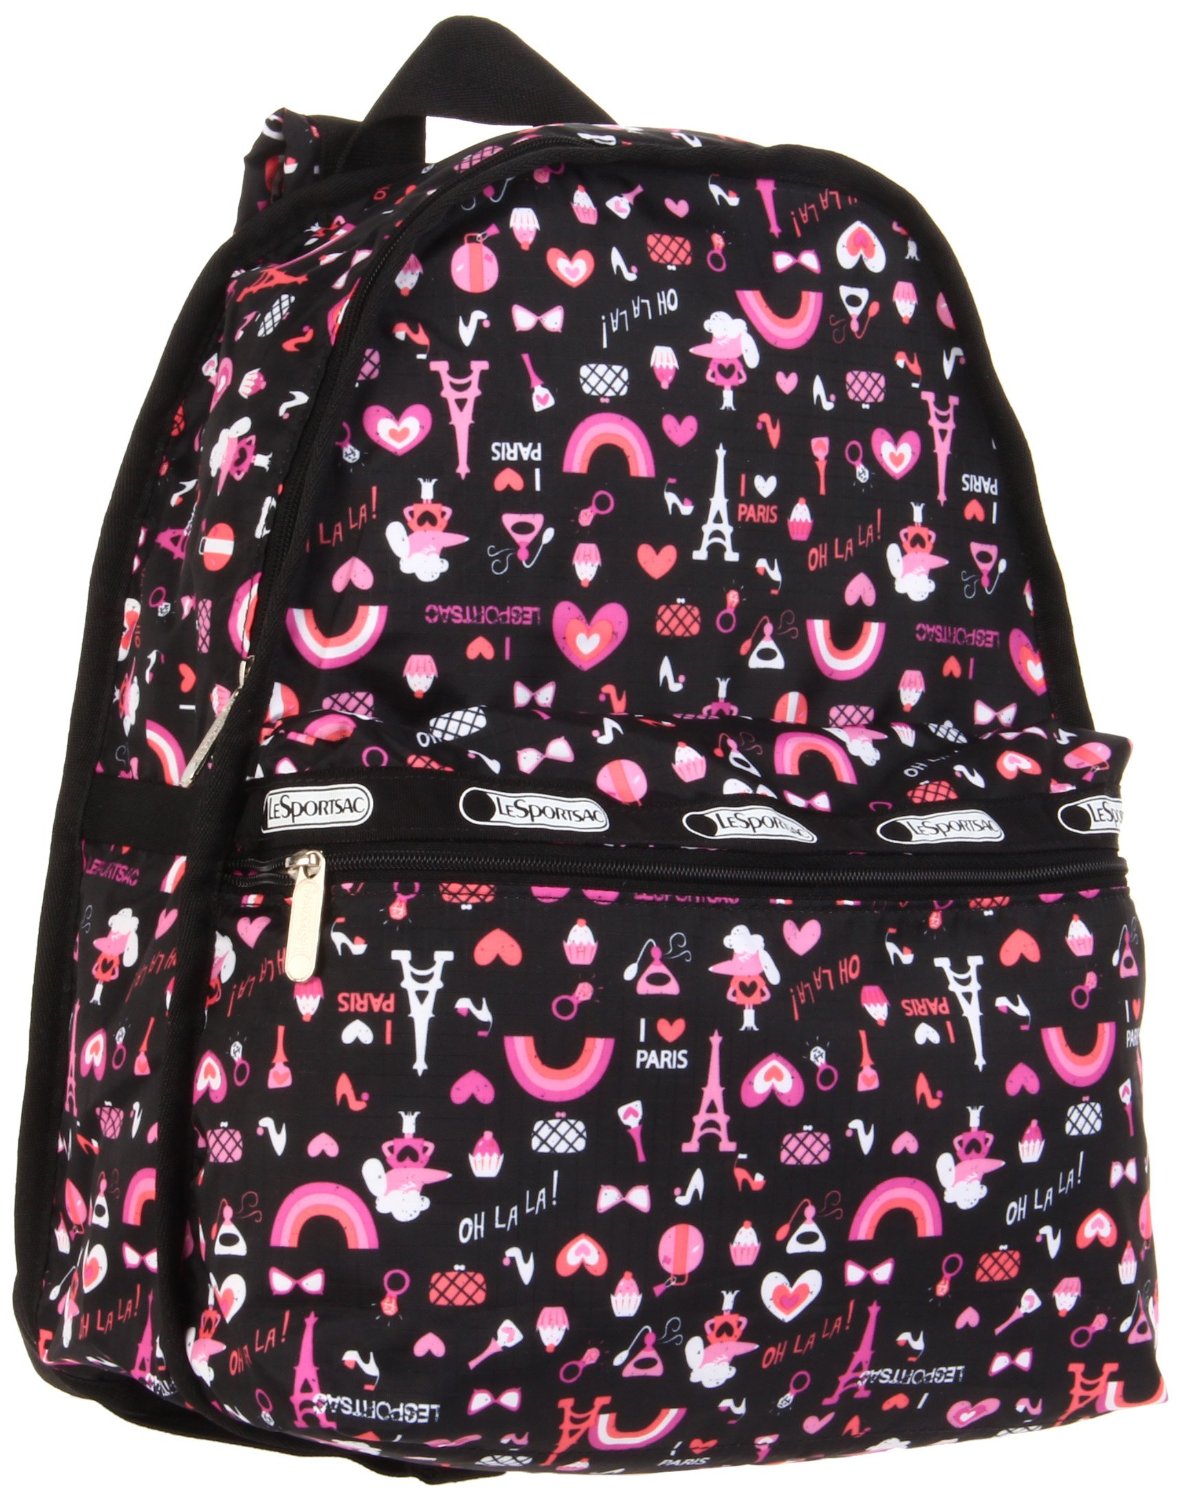 Cute heart backpack designs - Oh So Girly!